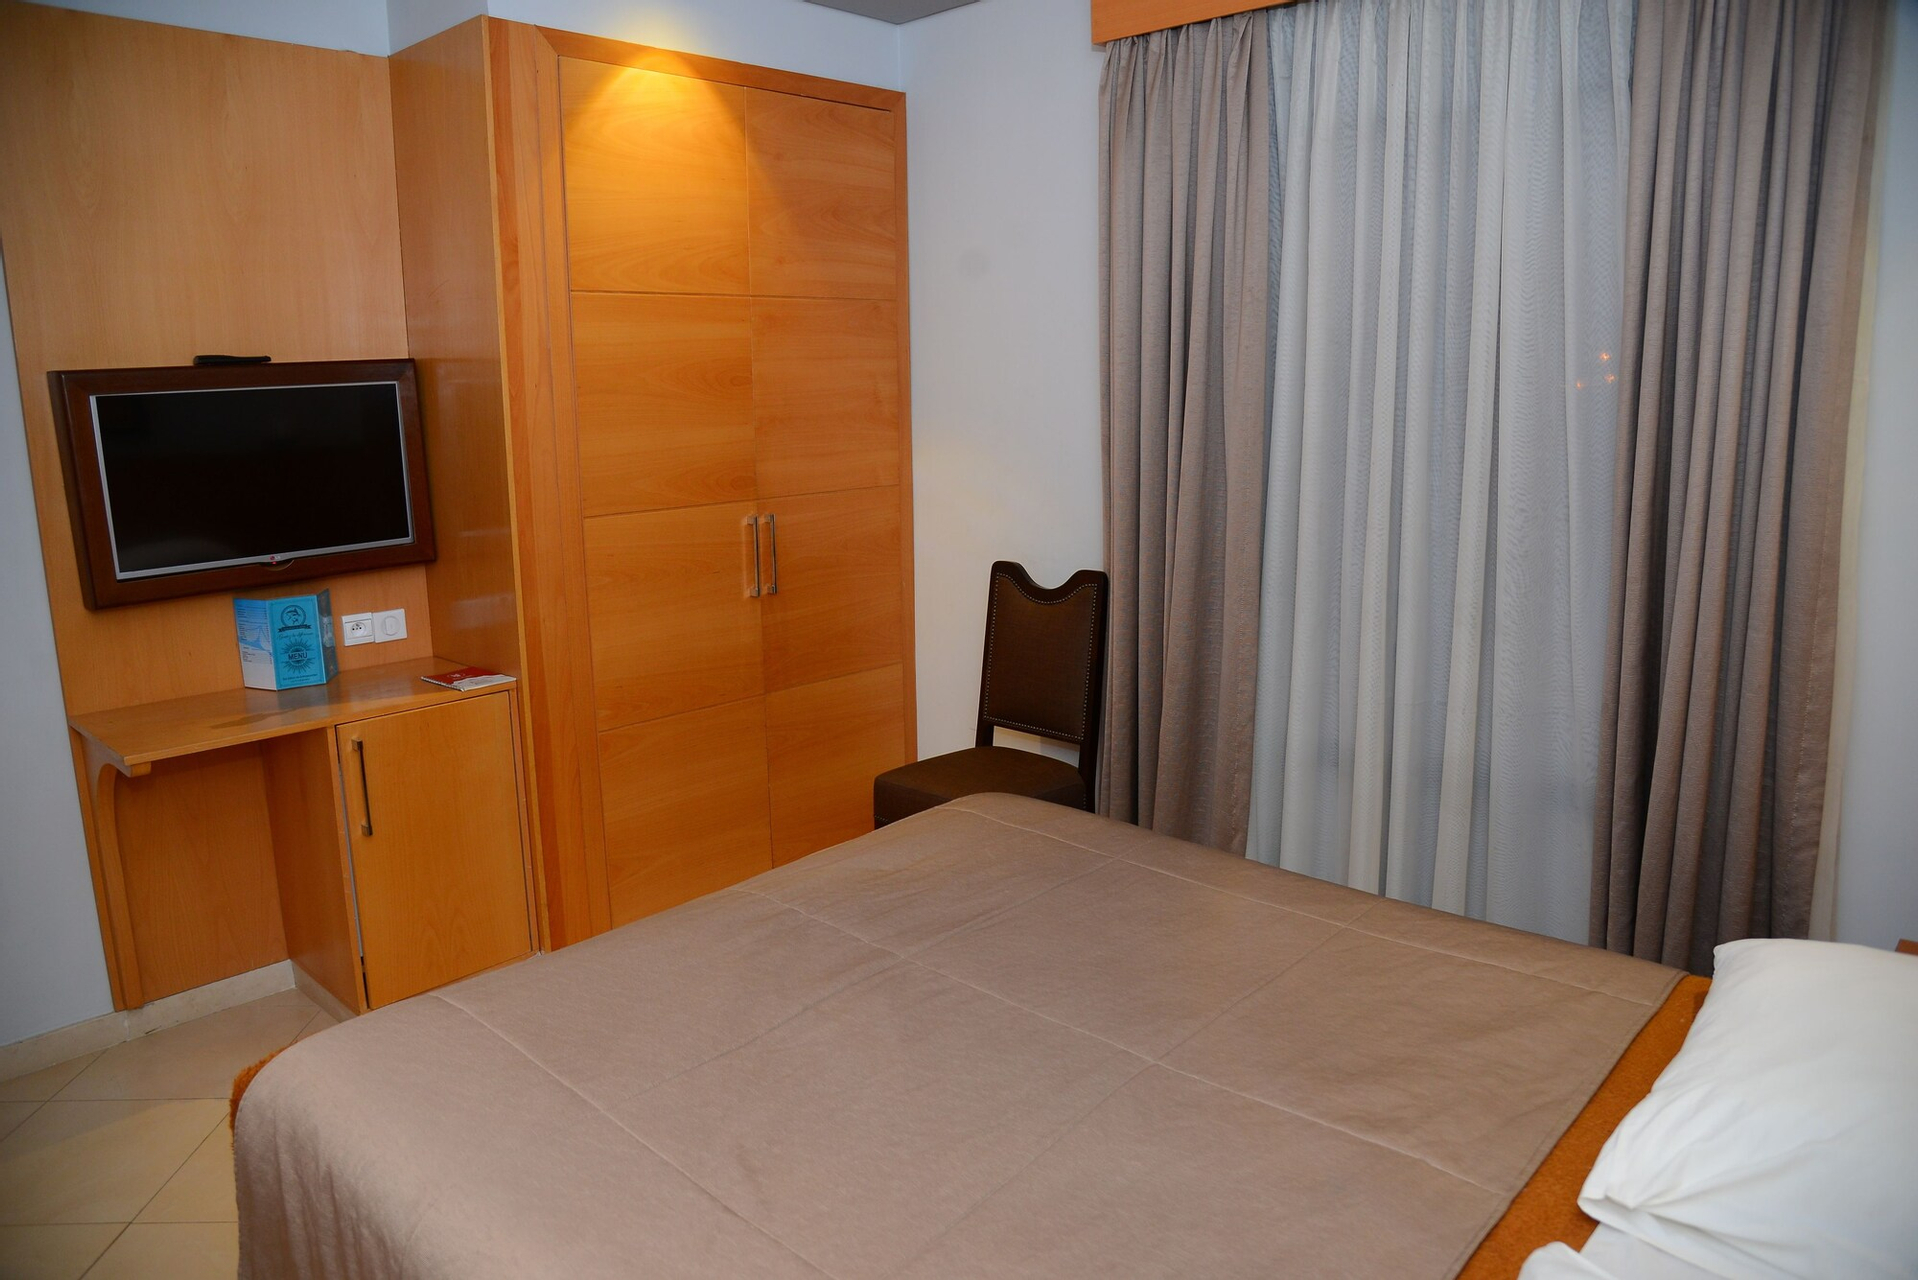 Room 5, Hôtel Al Amal, Tiznit